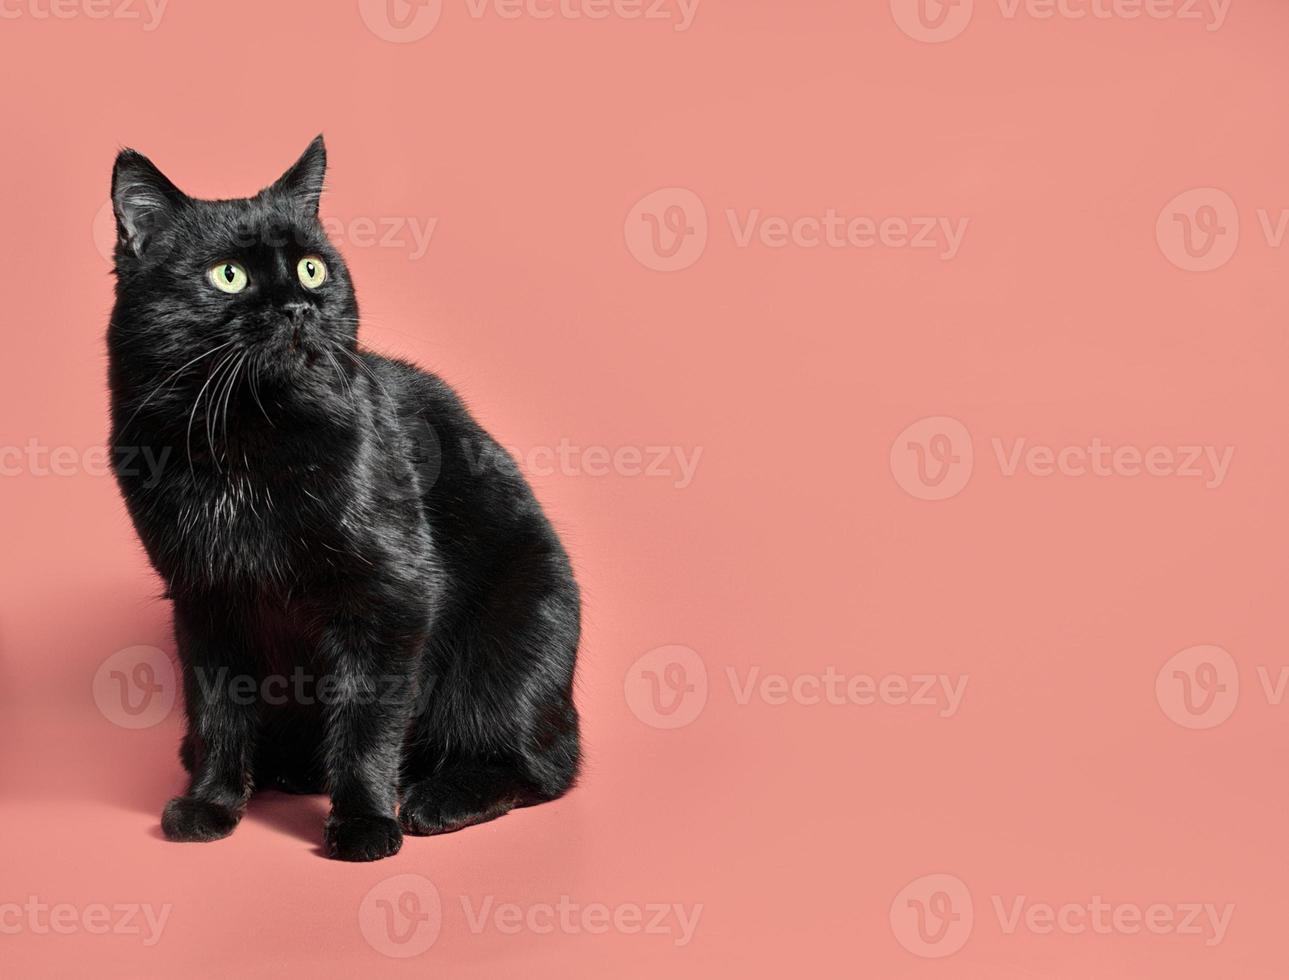 Black cat on an orange background photo